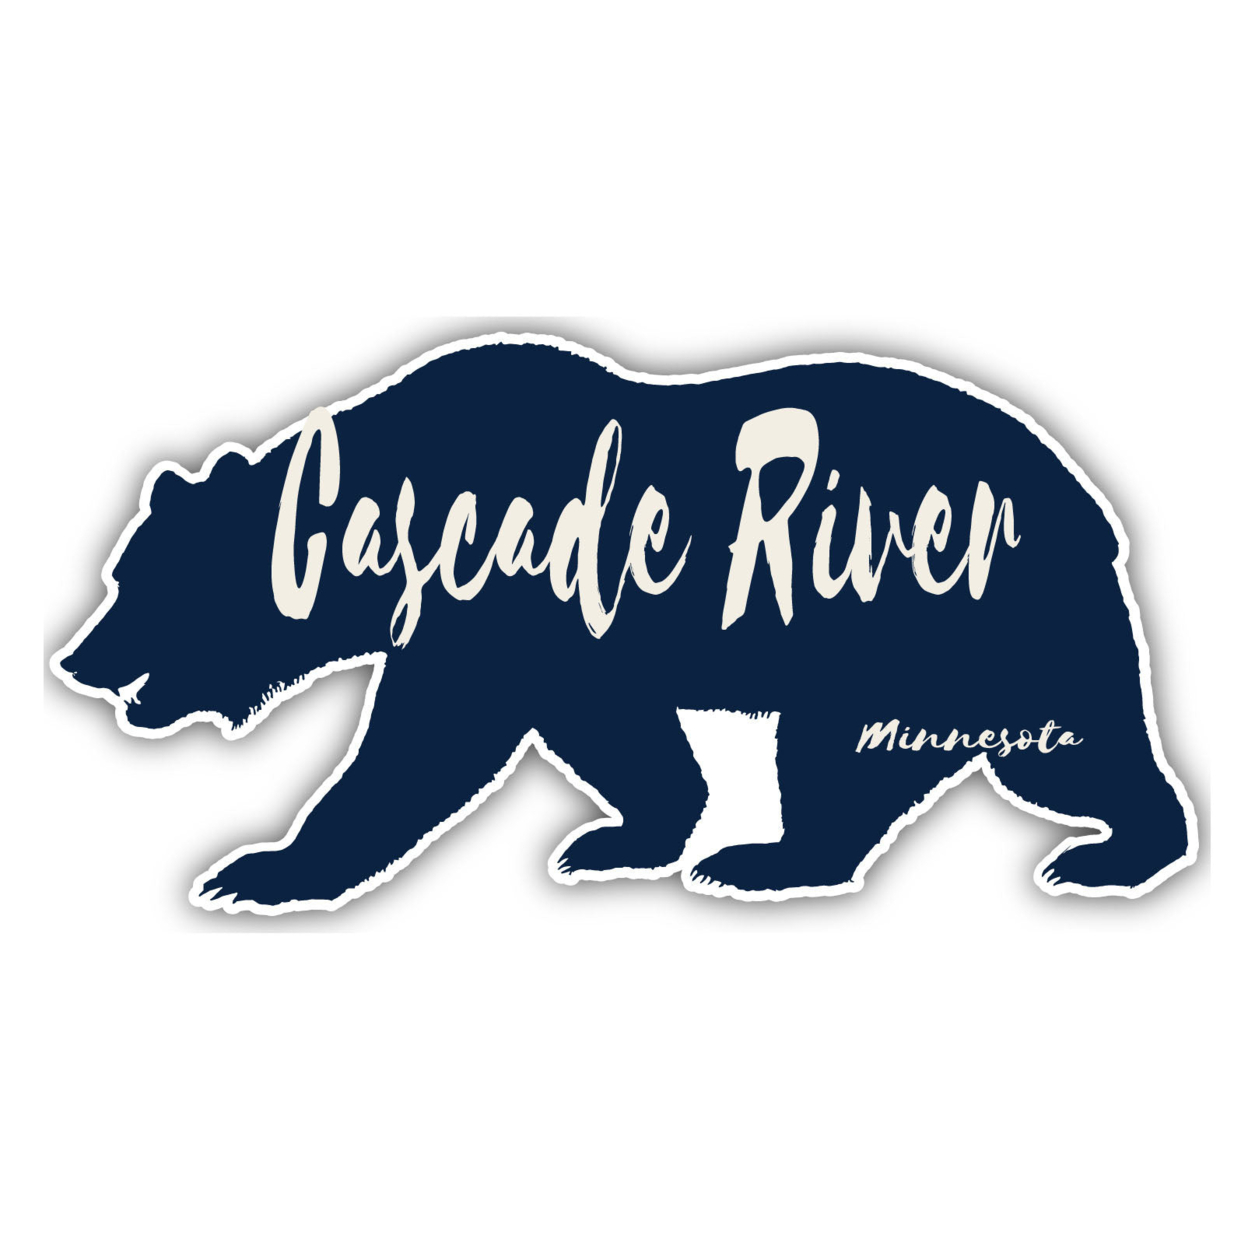 Cascade River Minnesota Souvenir Decorative Stickers (Choose Theme And Size) - Single Unit, 2-Inch, Bear